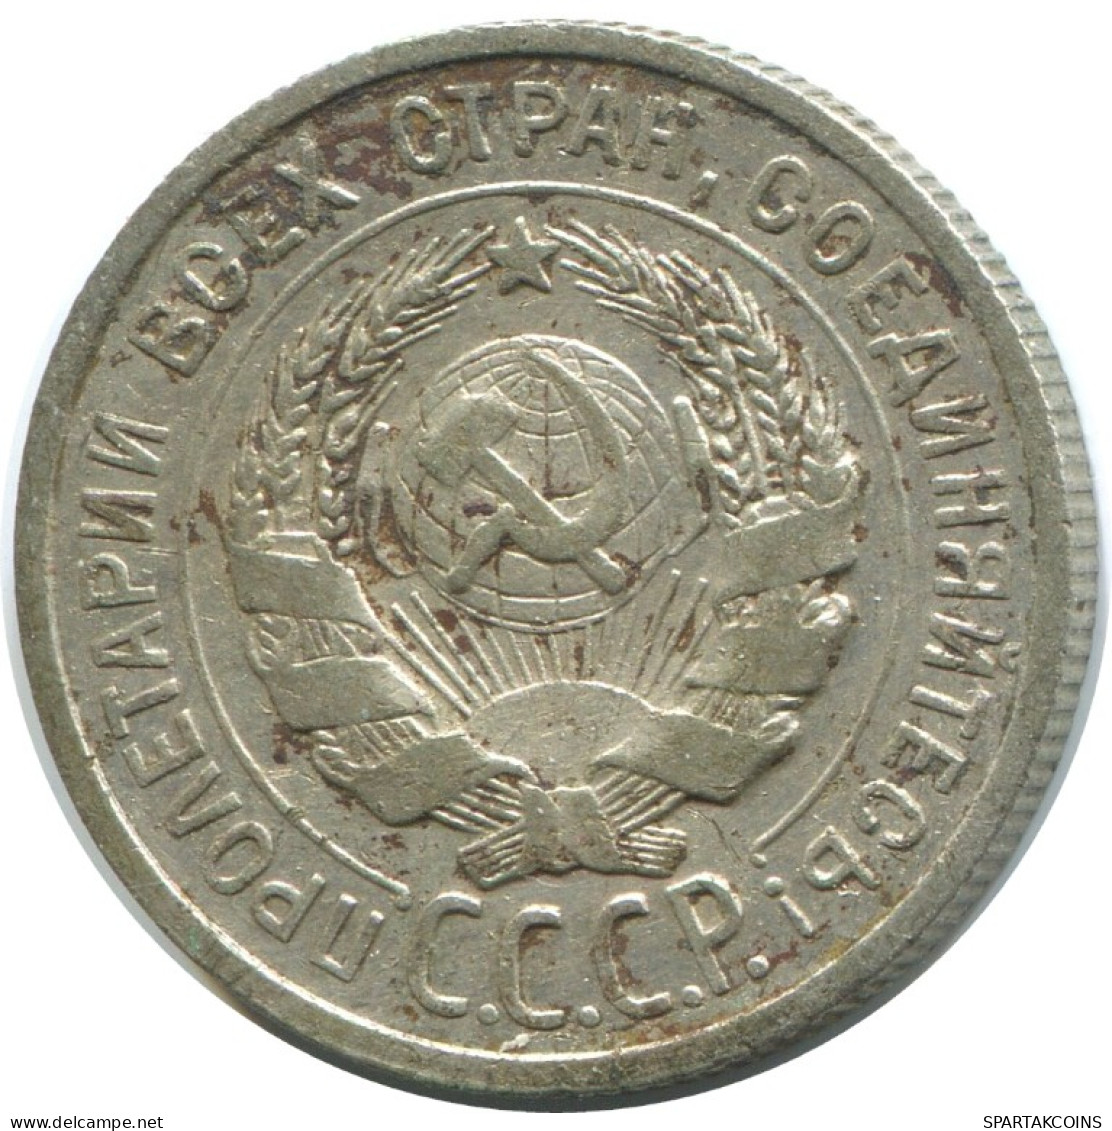 20 KOPEKS 1925 RUSSIA USSR SILVER Coin HIGH GRADE #AF337.4.U.A - Russia